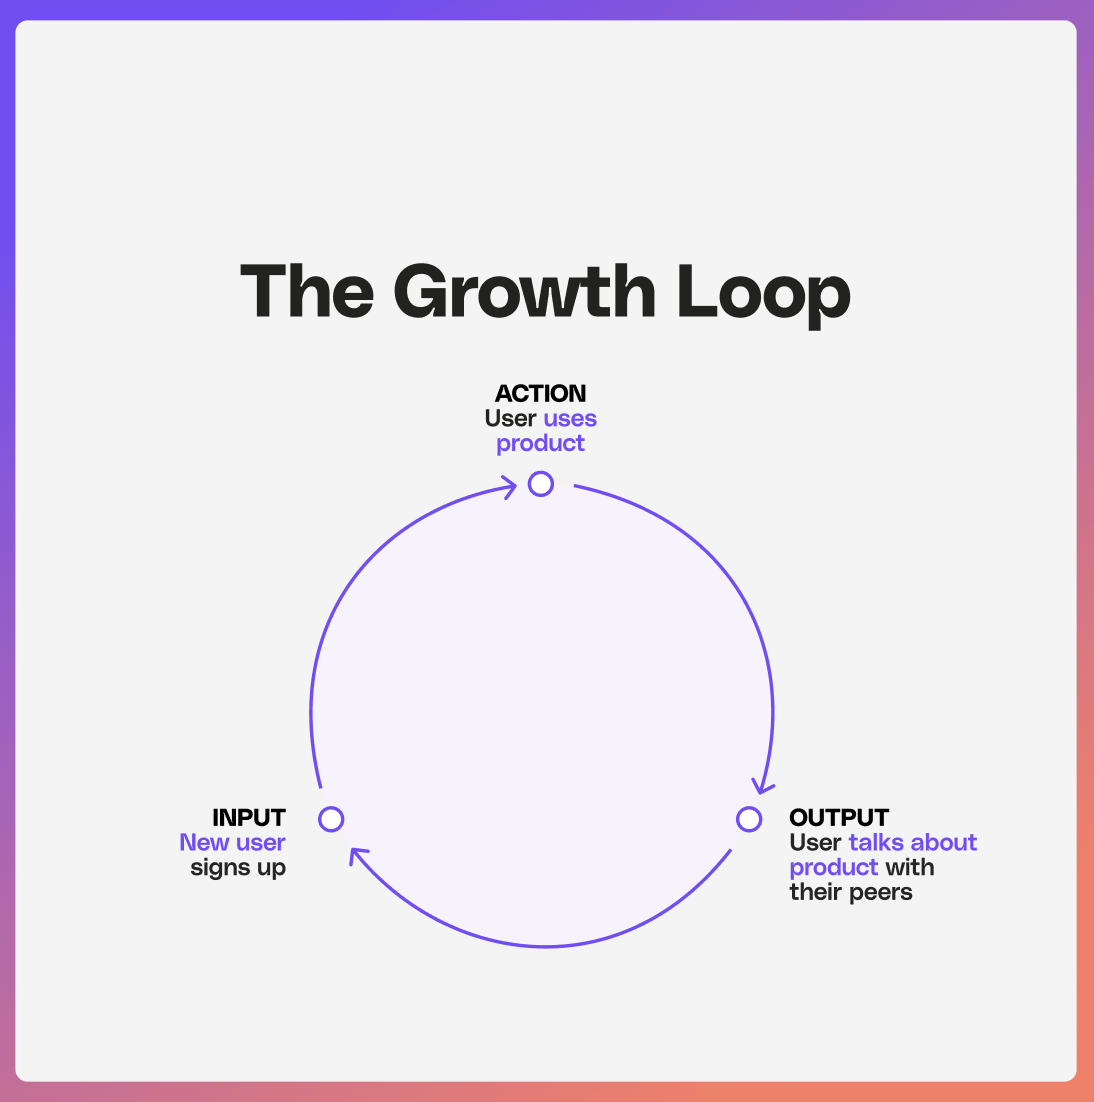 The growth loop